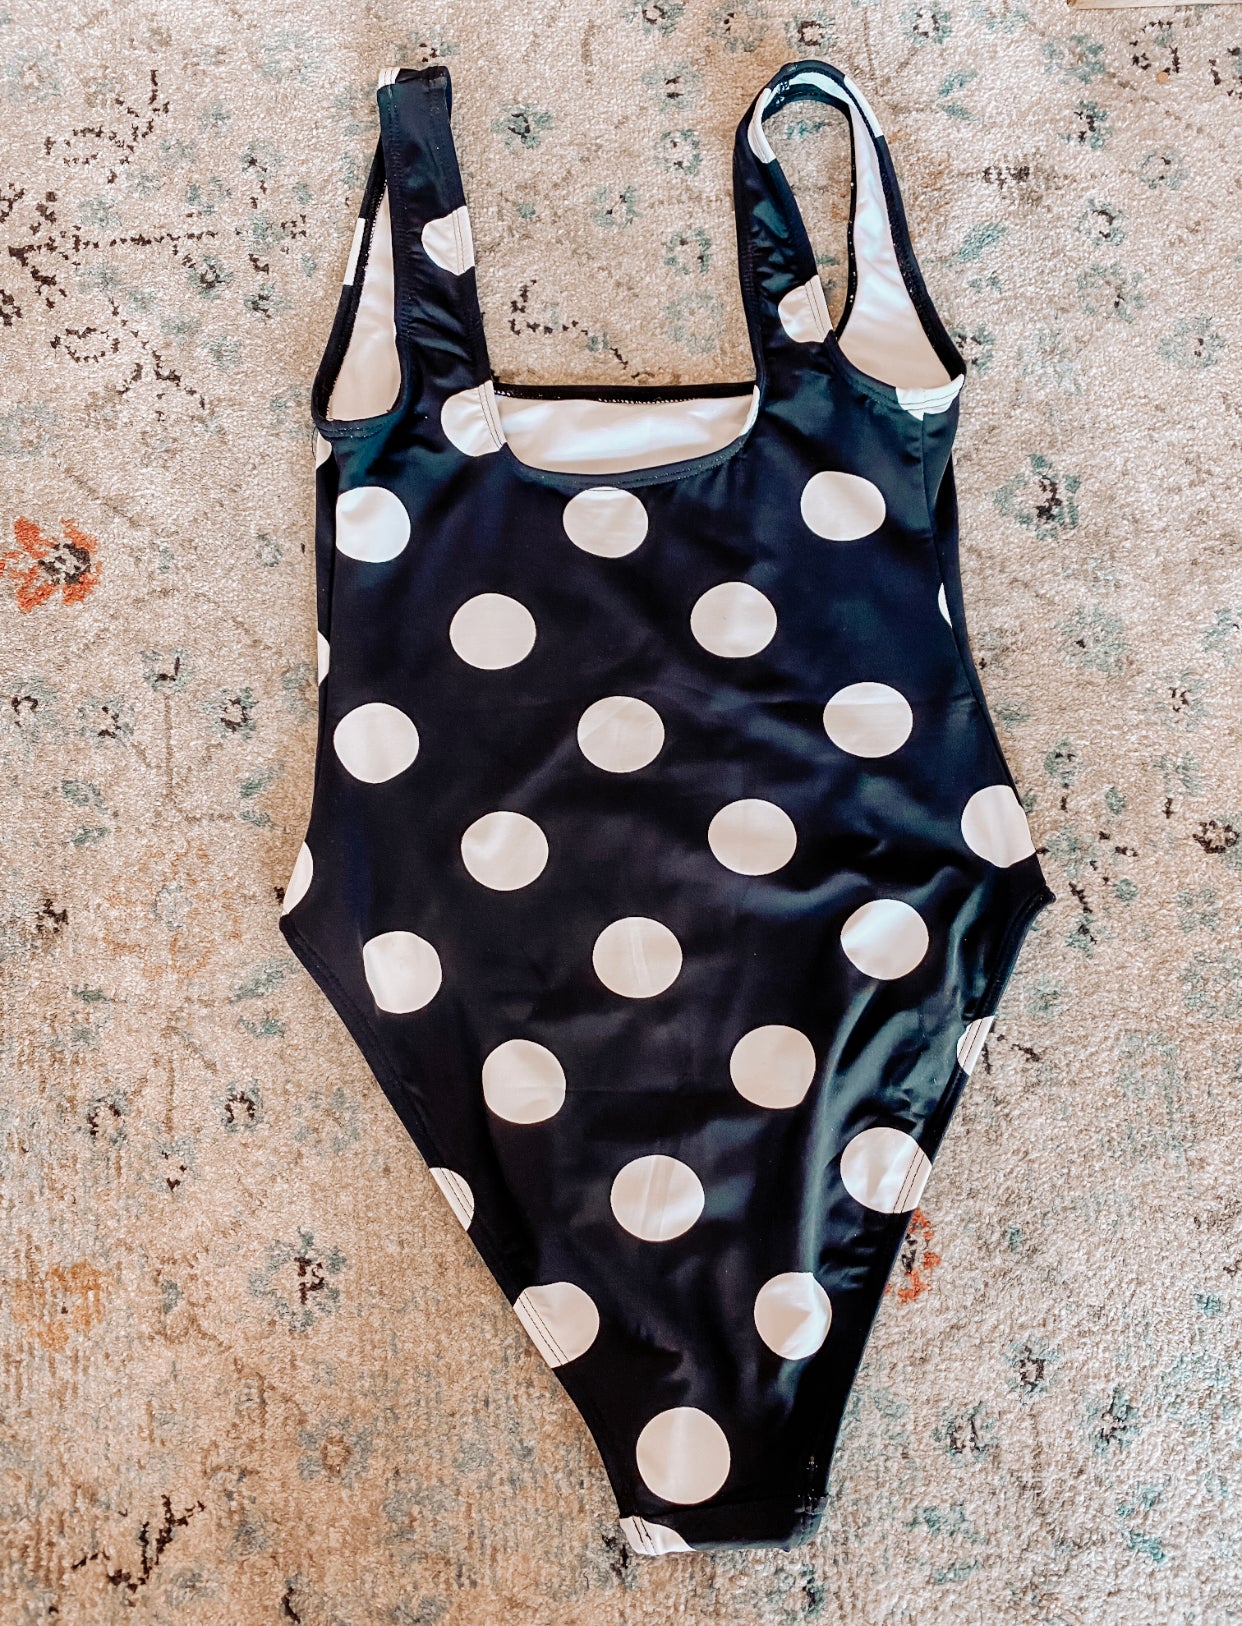 Black Polka Dot One-Piece Swimsuit